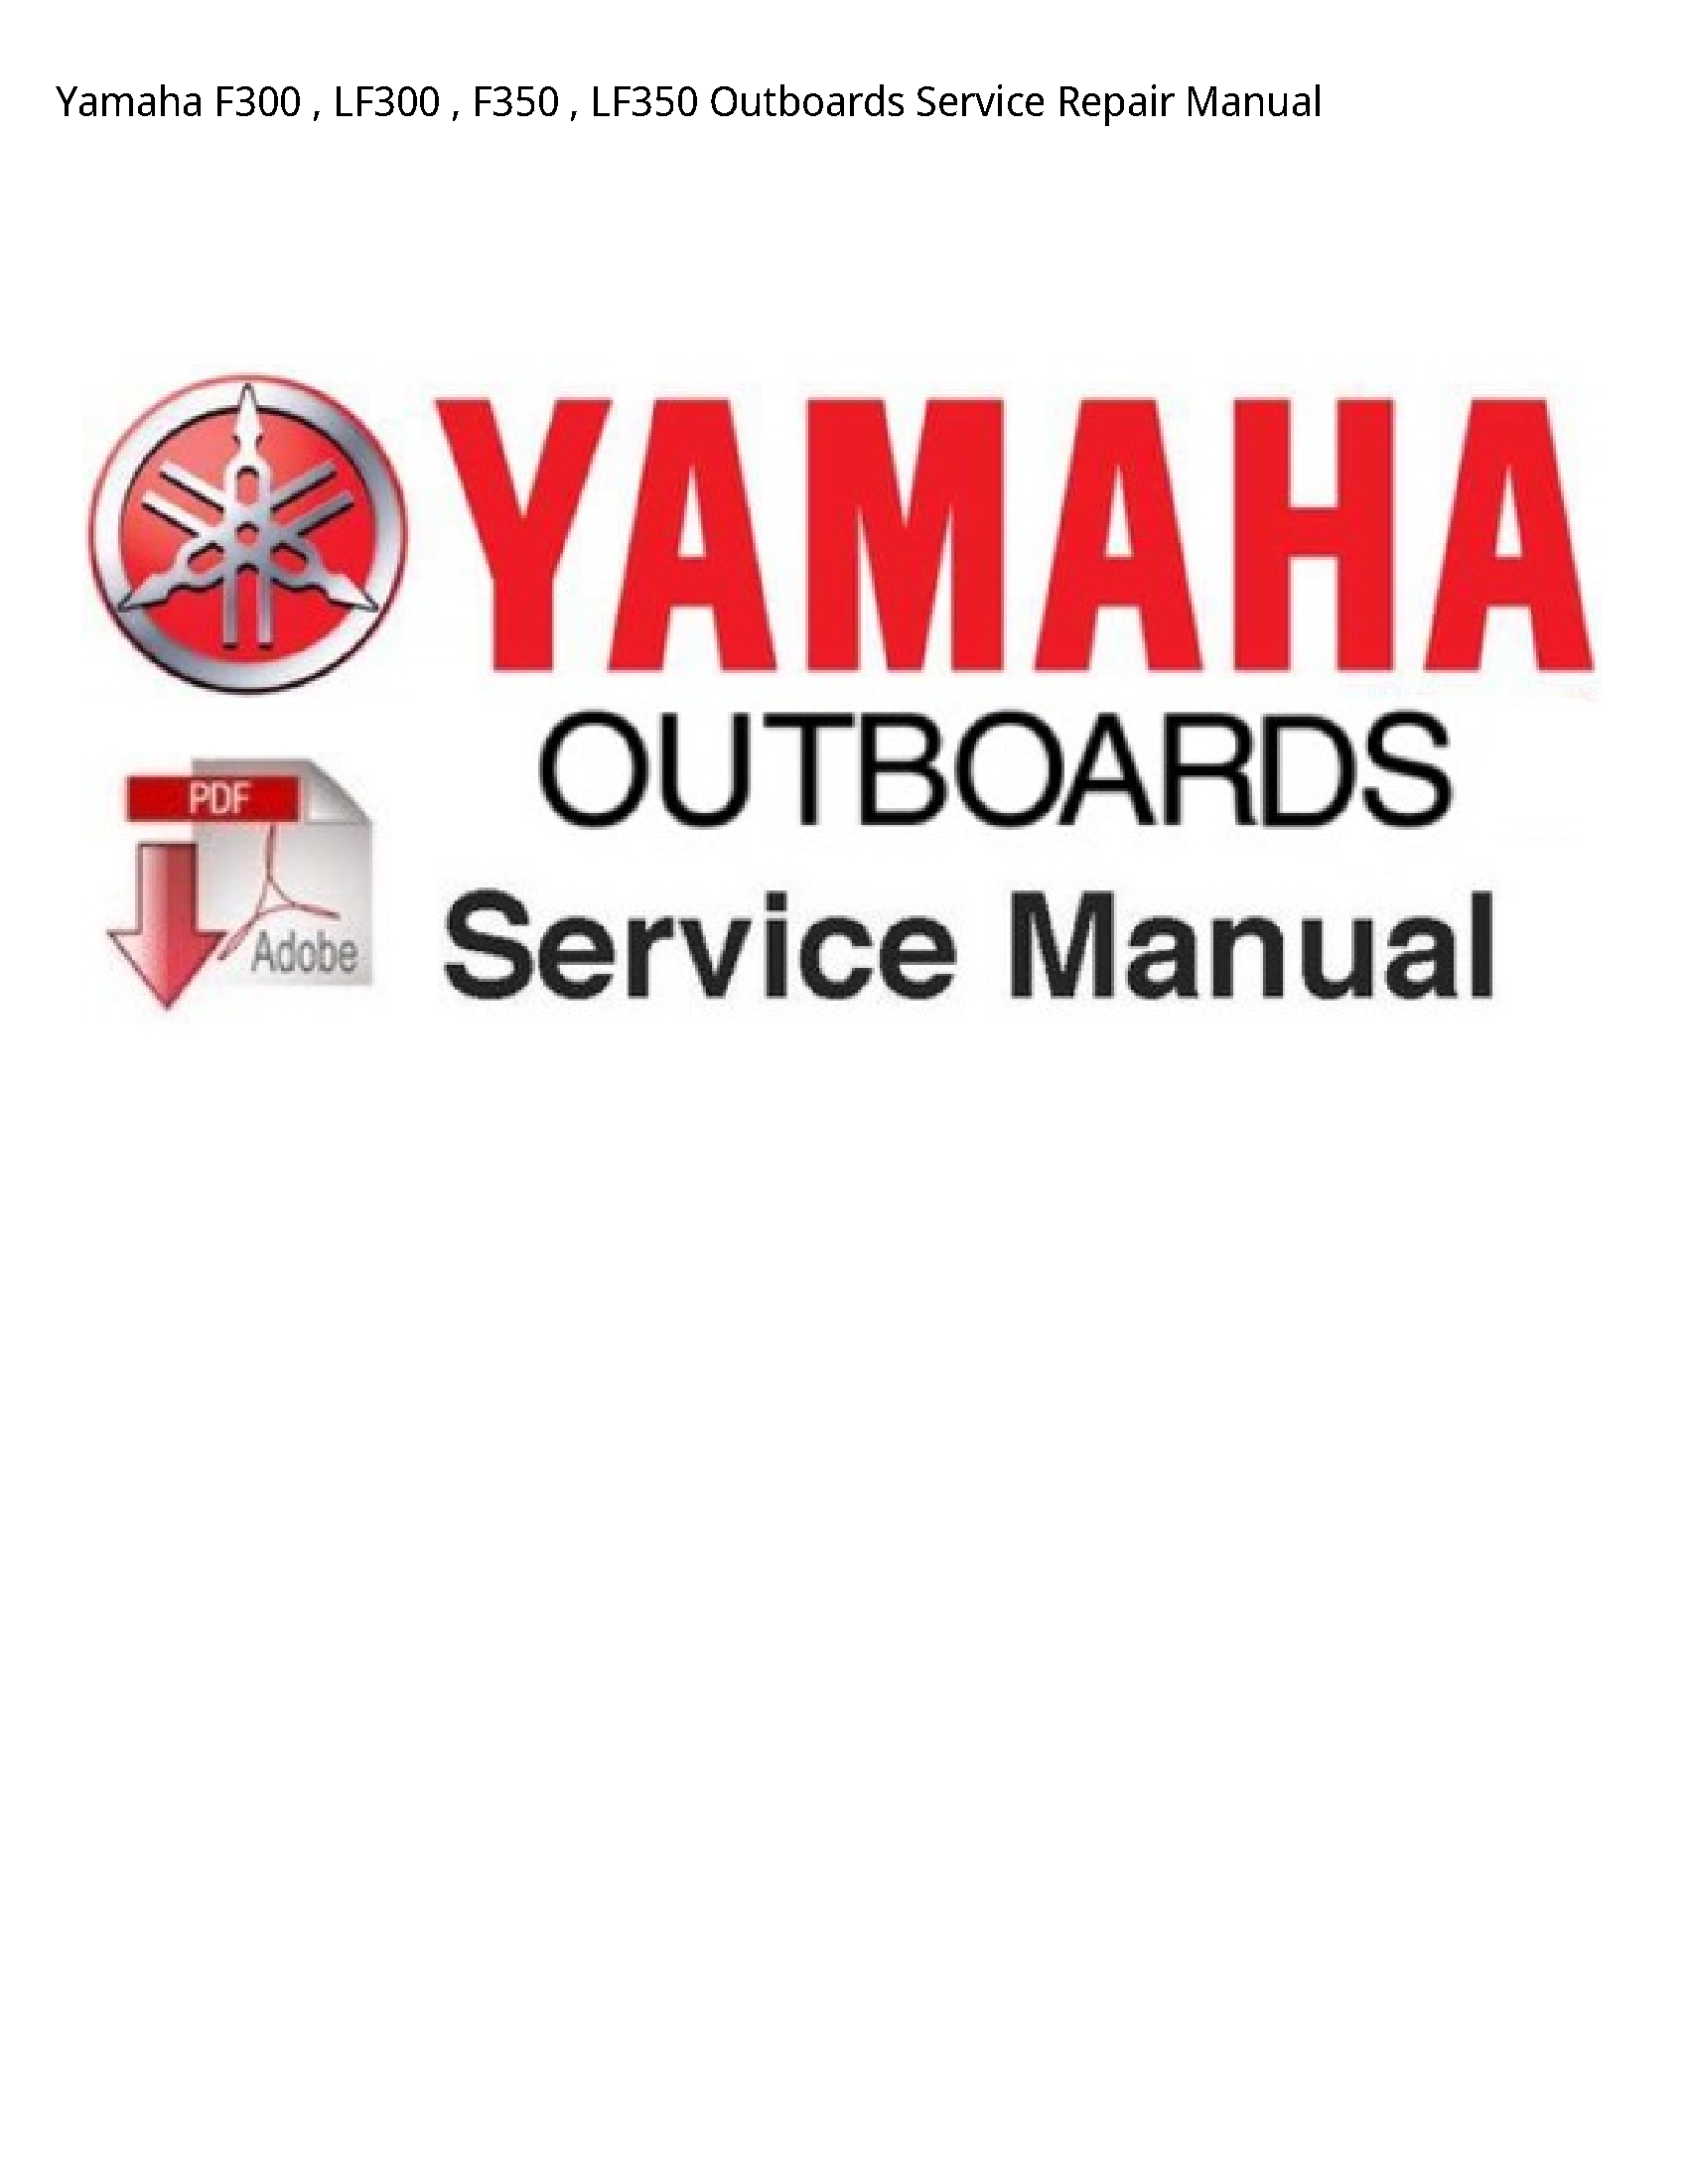 Yamaha F300 Outboards manual